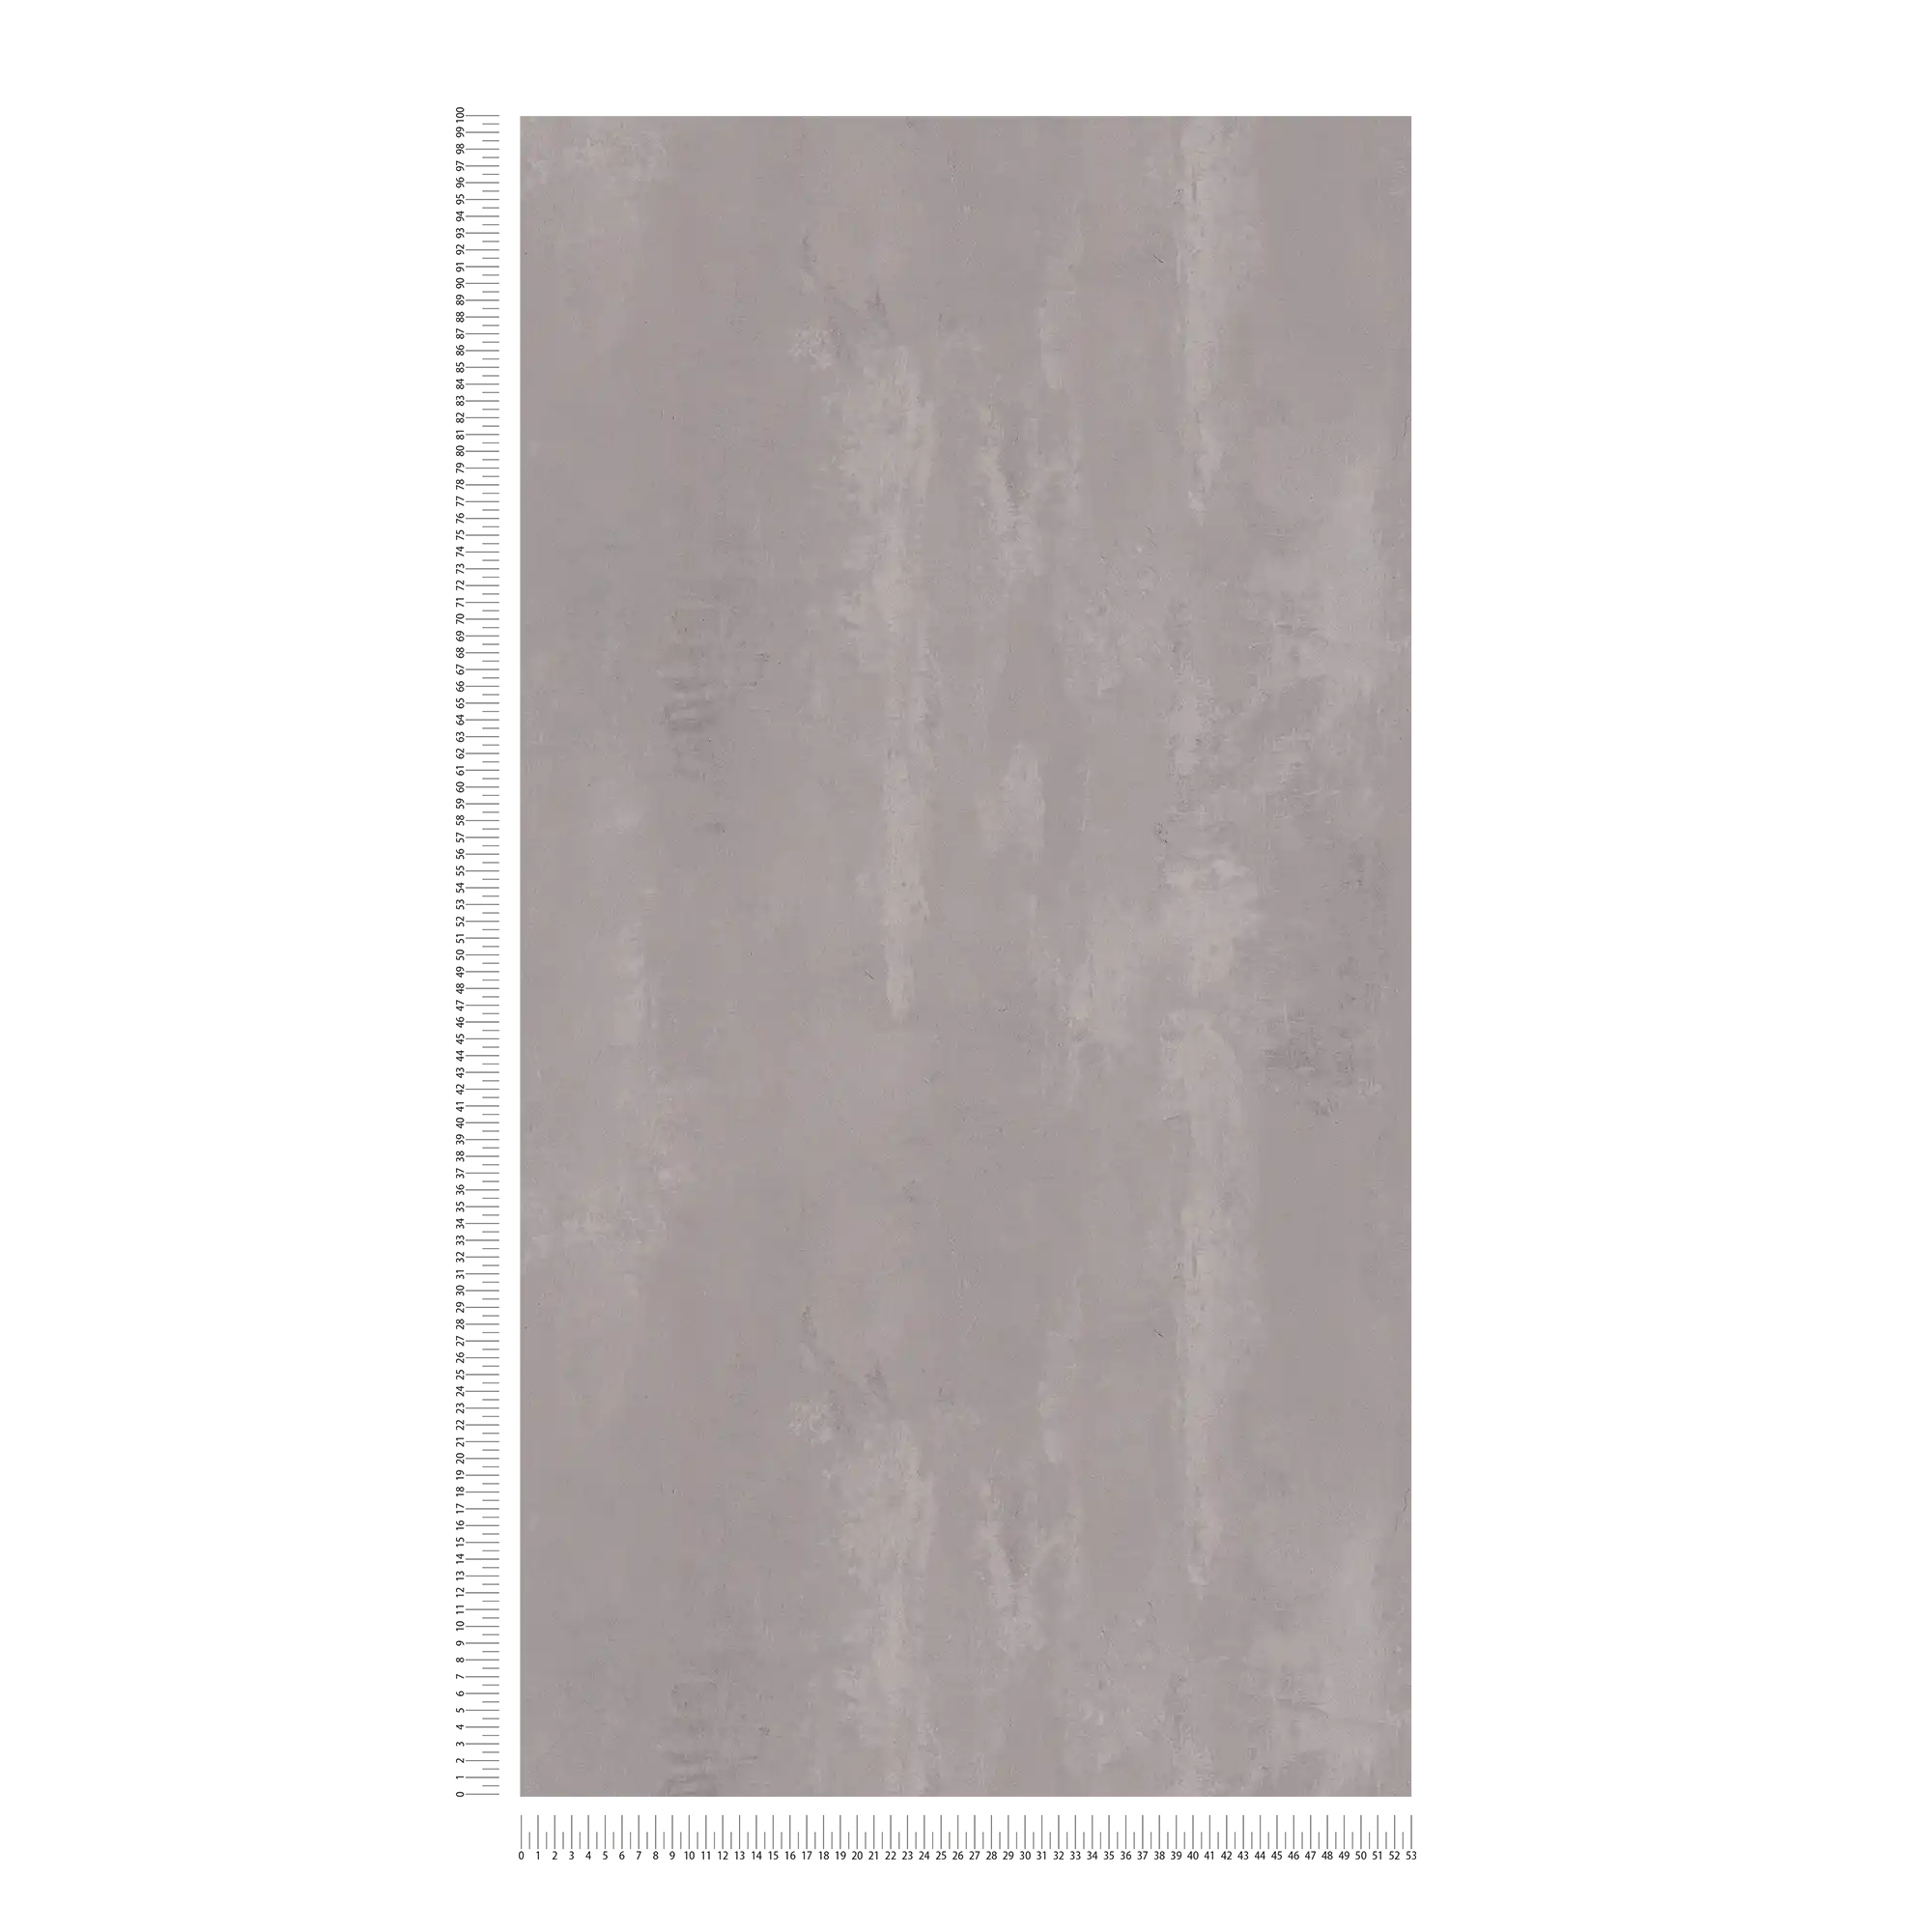             Papier peint intissé effet béton balayé - gris
        